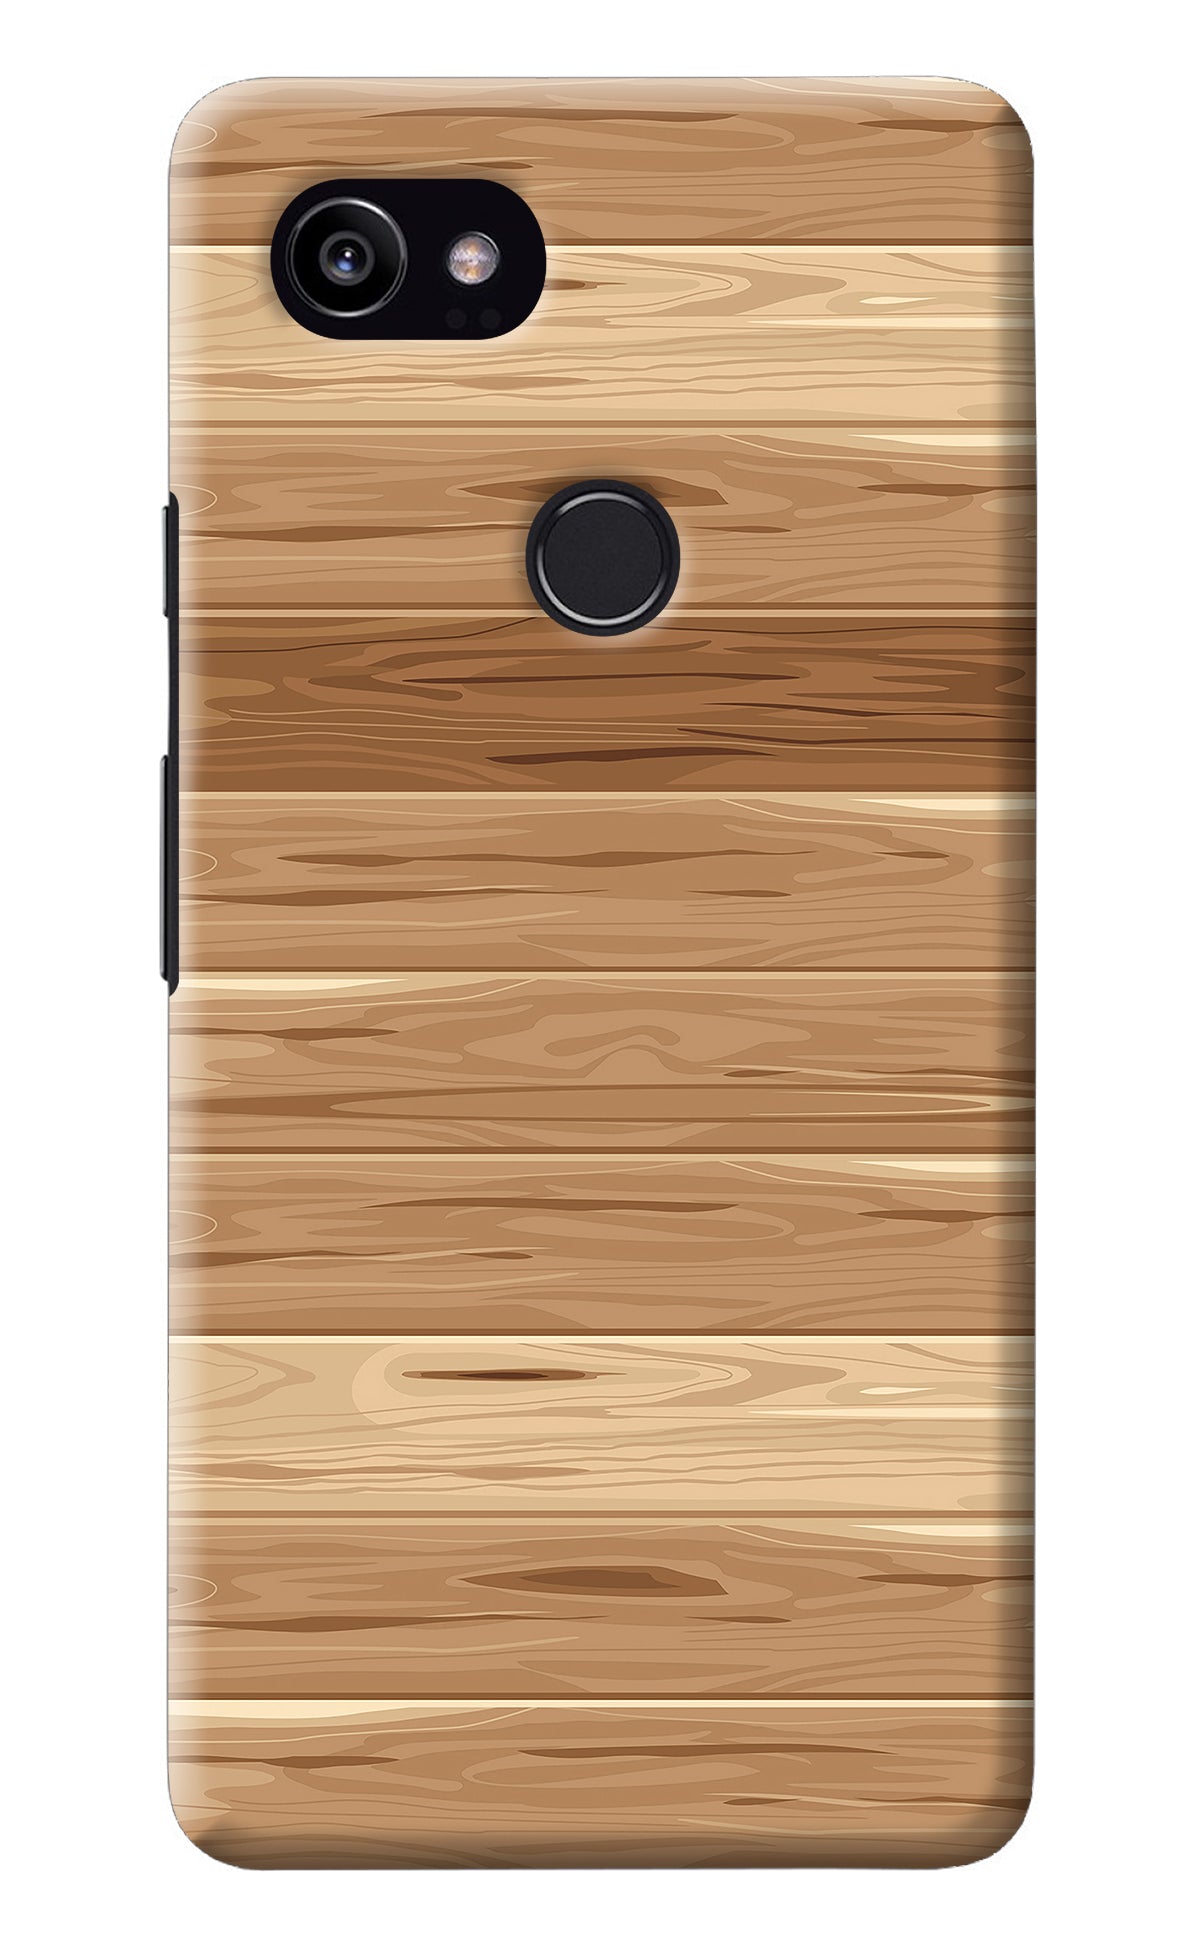 Wooden Vector Google Pixel 2 XL Back Cover